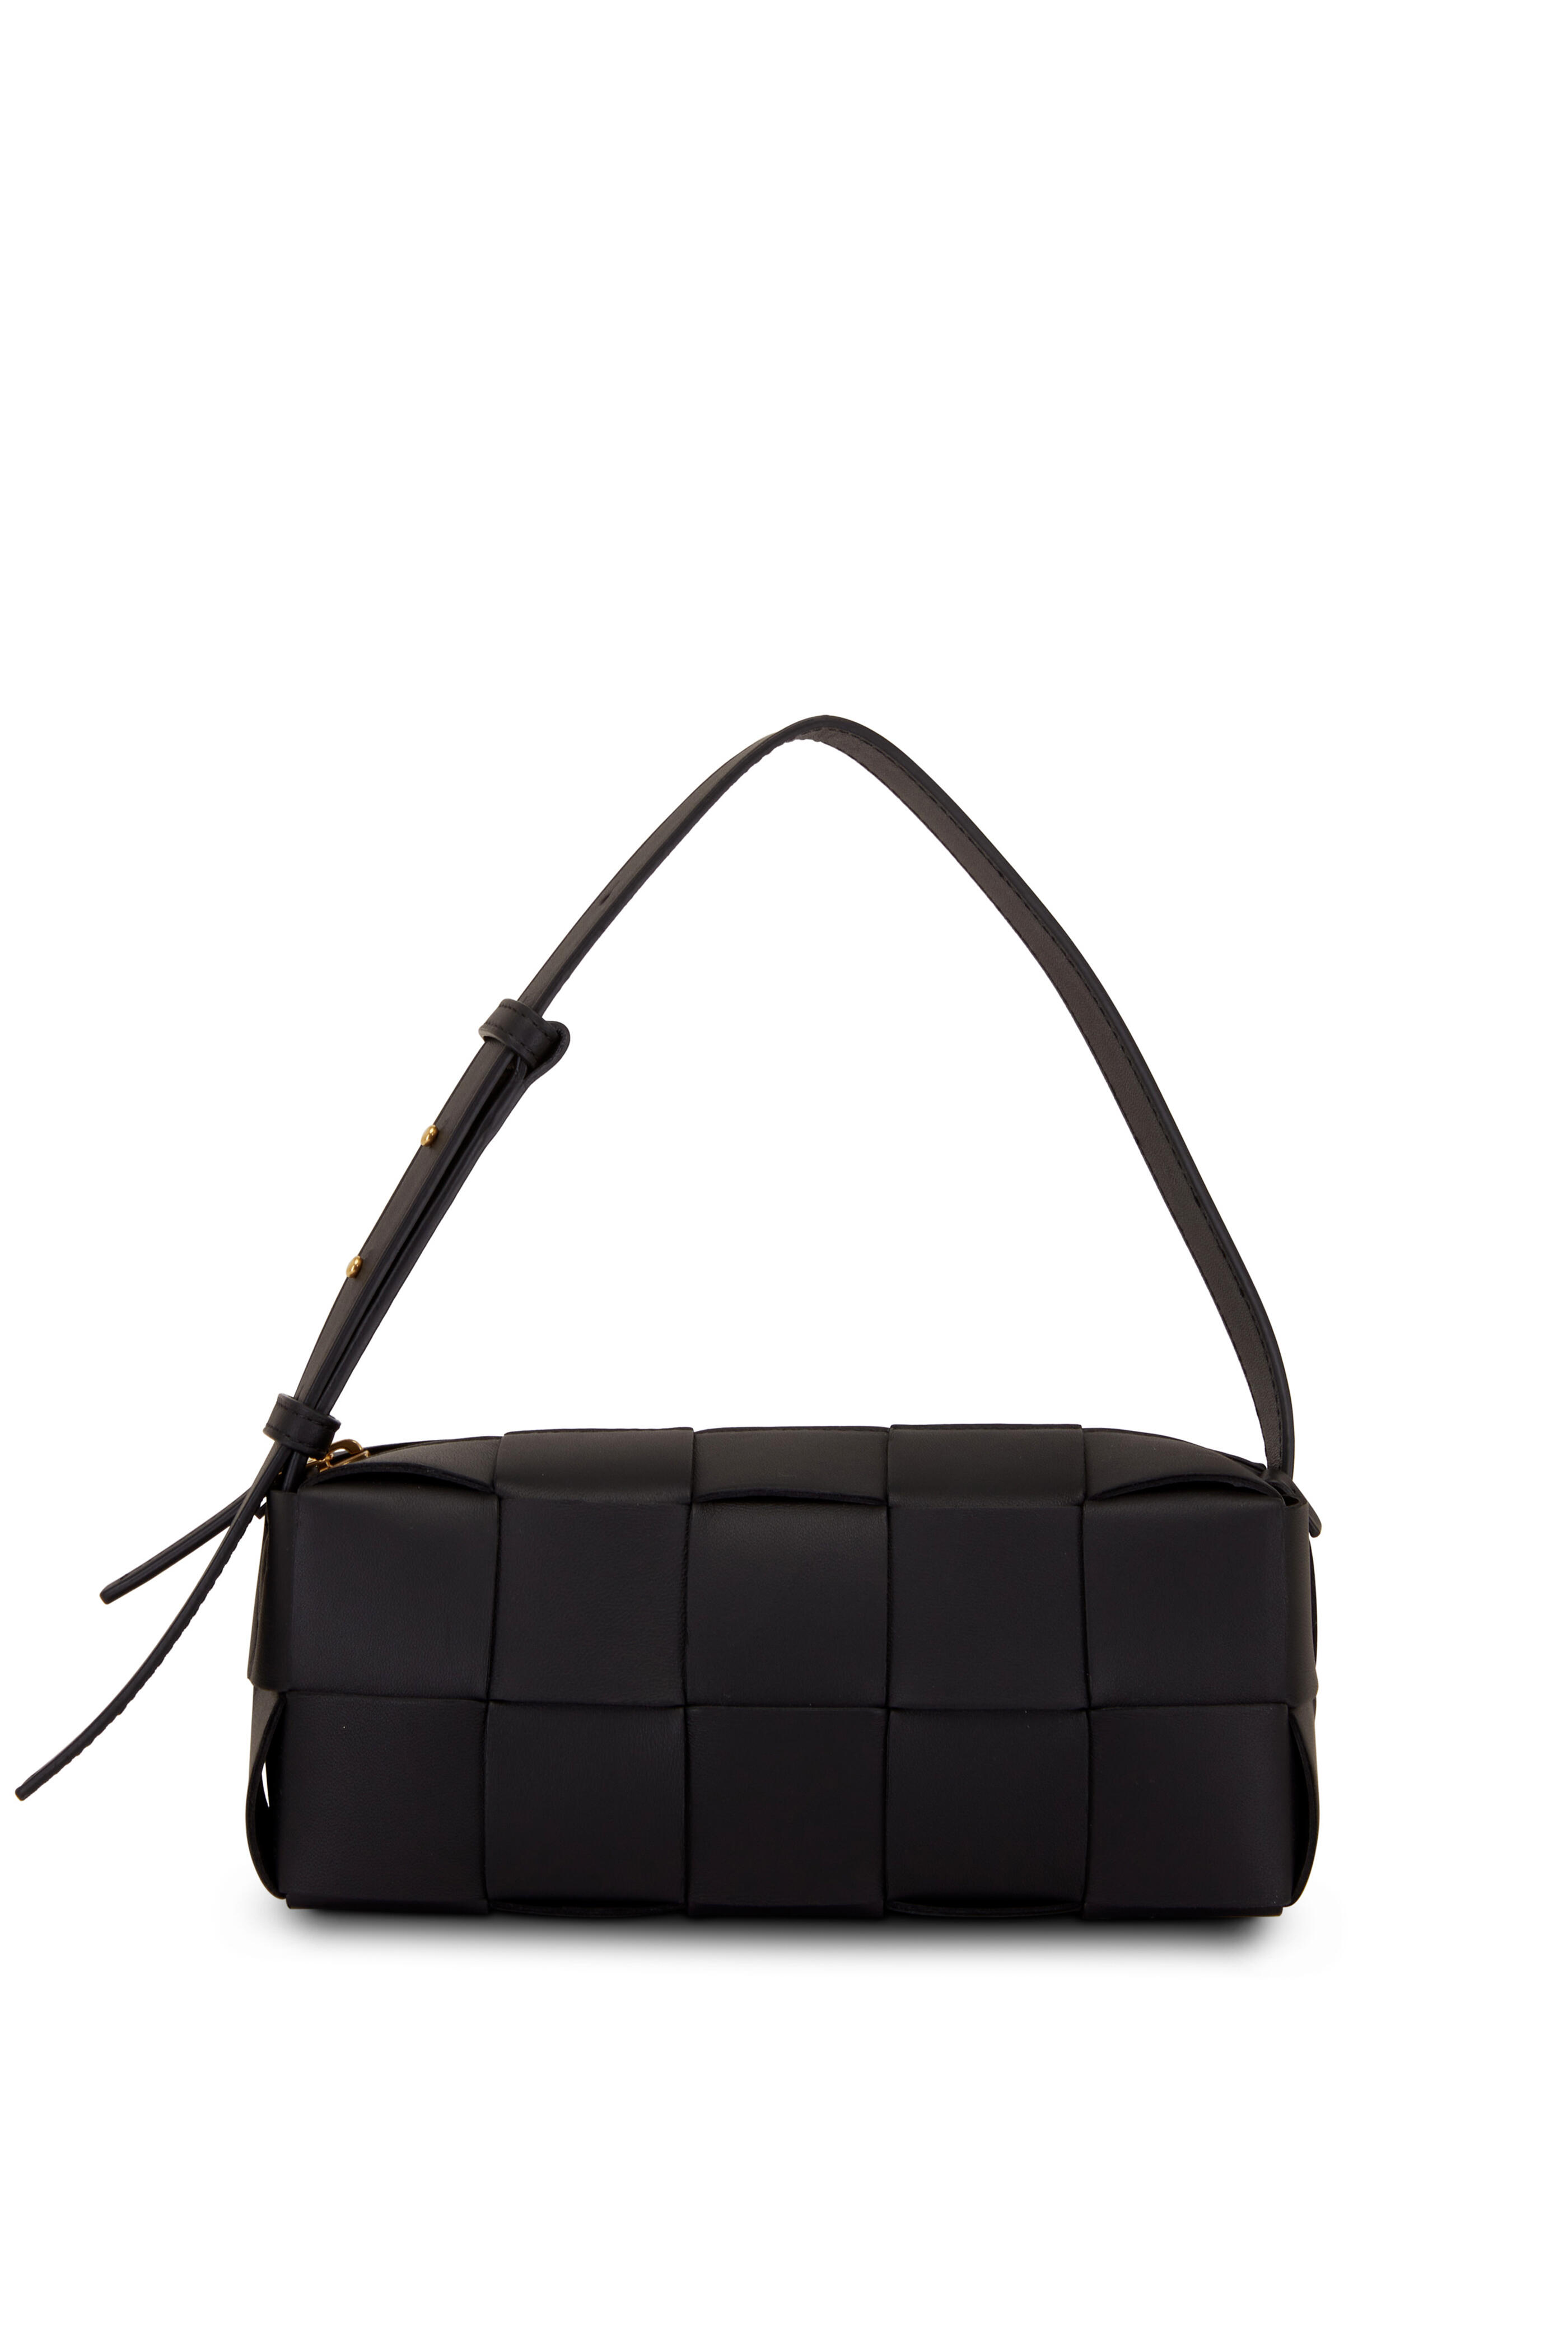 BOTTEGA VENETA, 'Cassette' Padded Intreccio Leather Crossbody Bag, Women